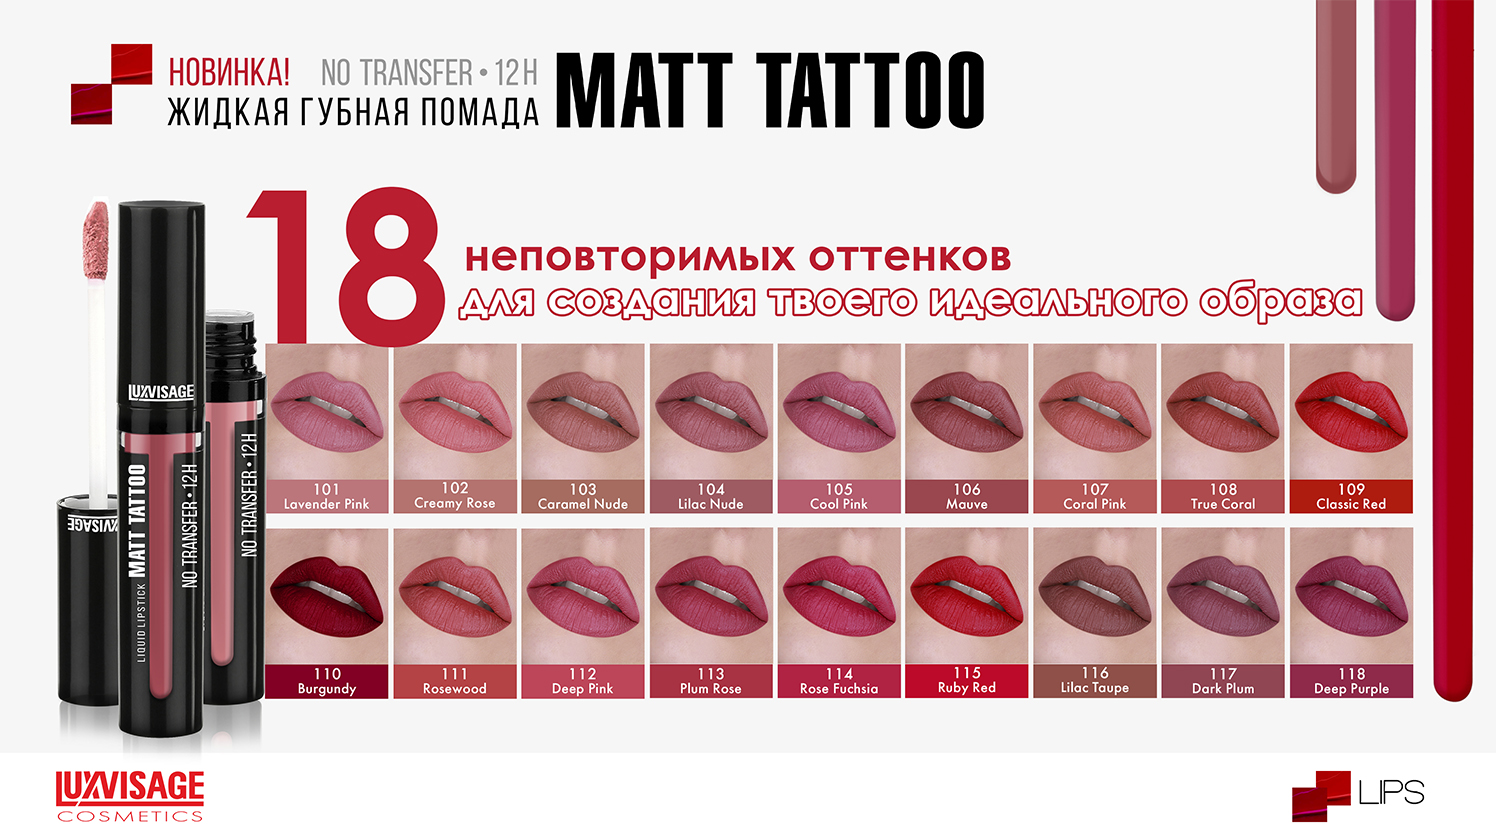 Lux visage помада жидкая Matt Tattoo 12h 116